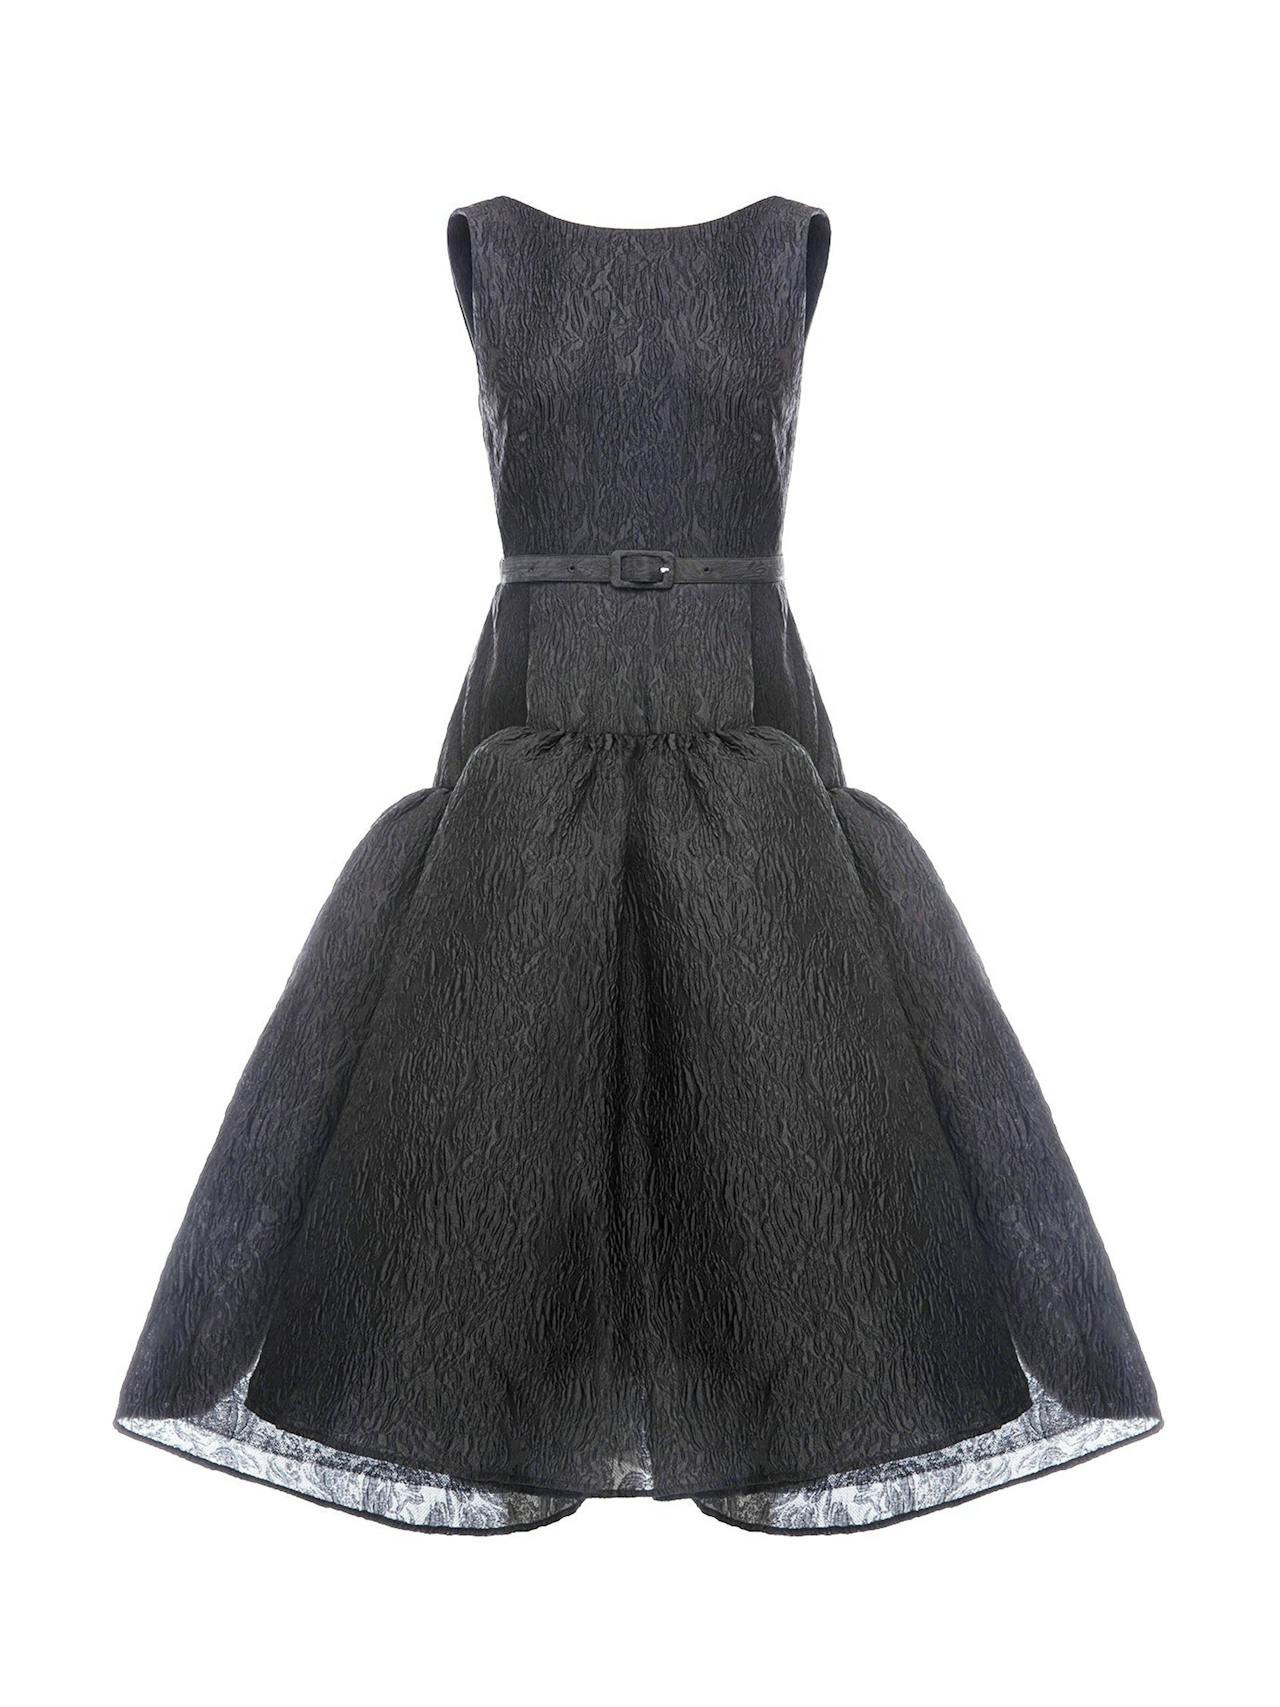 Black jacquard Audrey dress